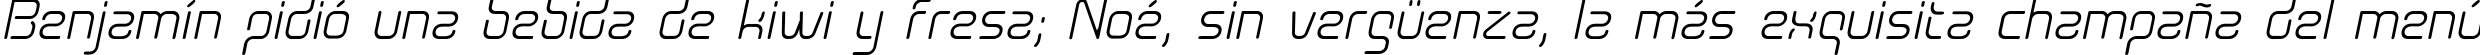 Пример написания шрифтом Aunchanted Oblique текста на испанском